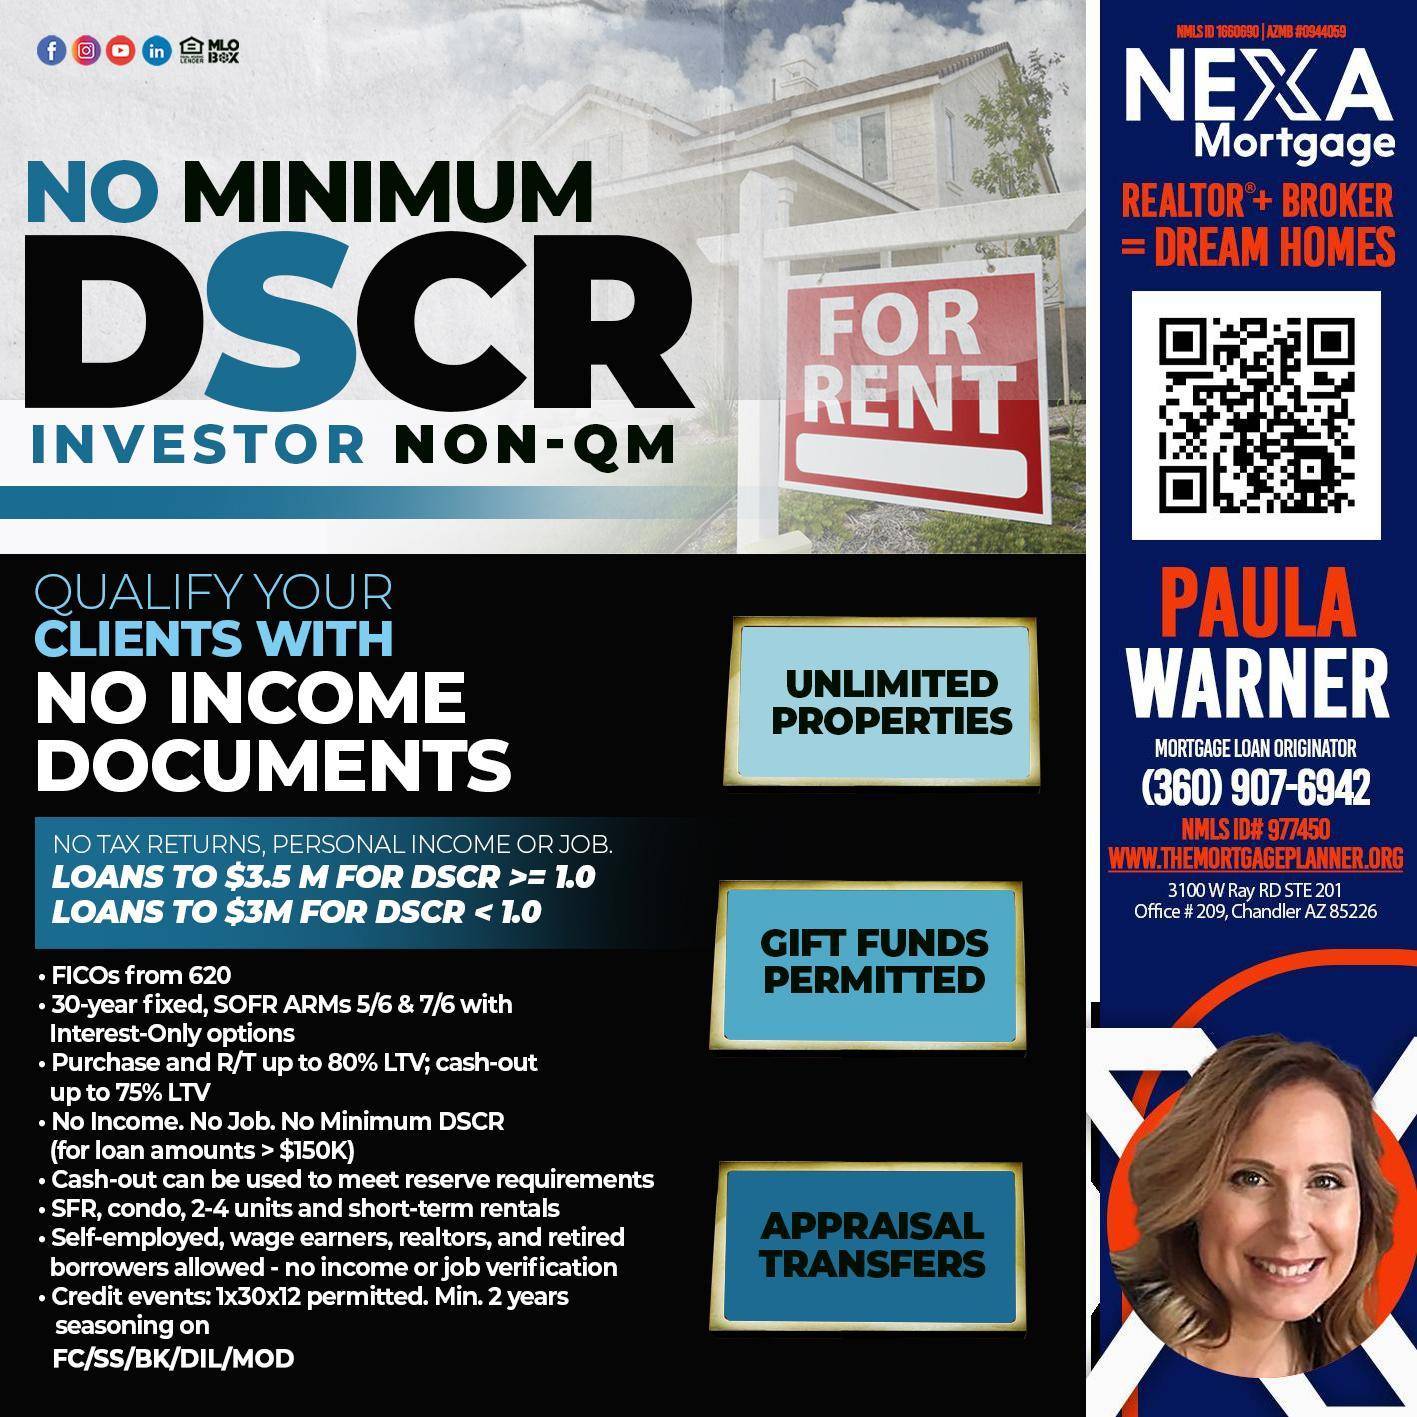 DSCR - Paula Warner -Mortgage Loan Originator